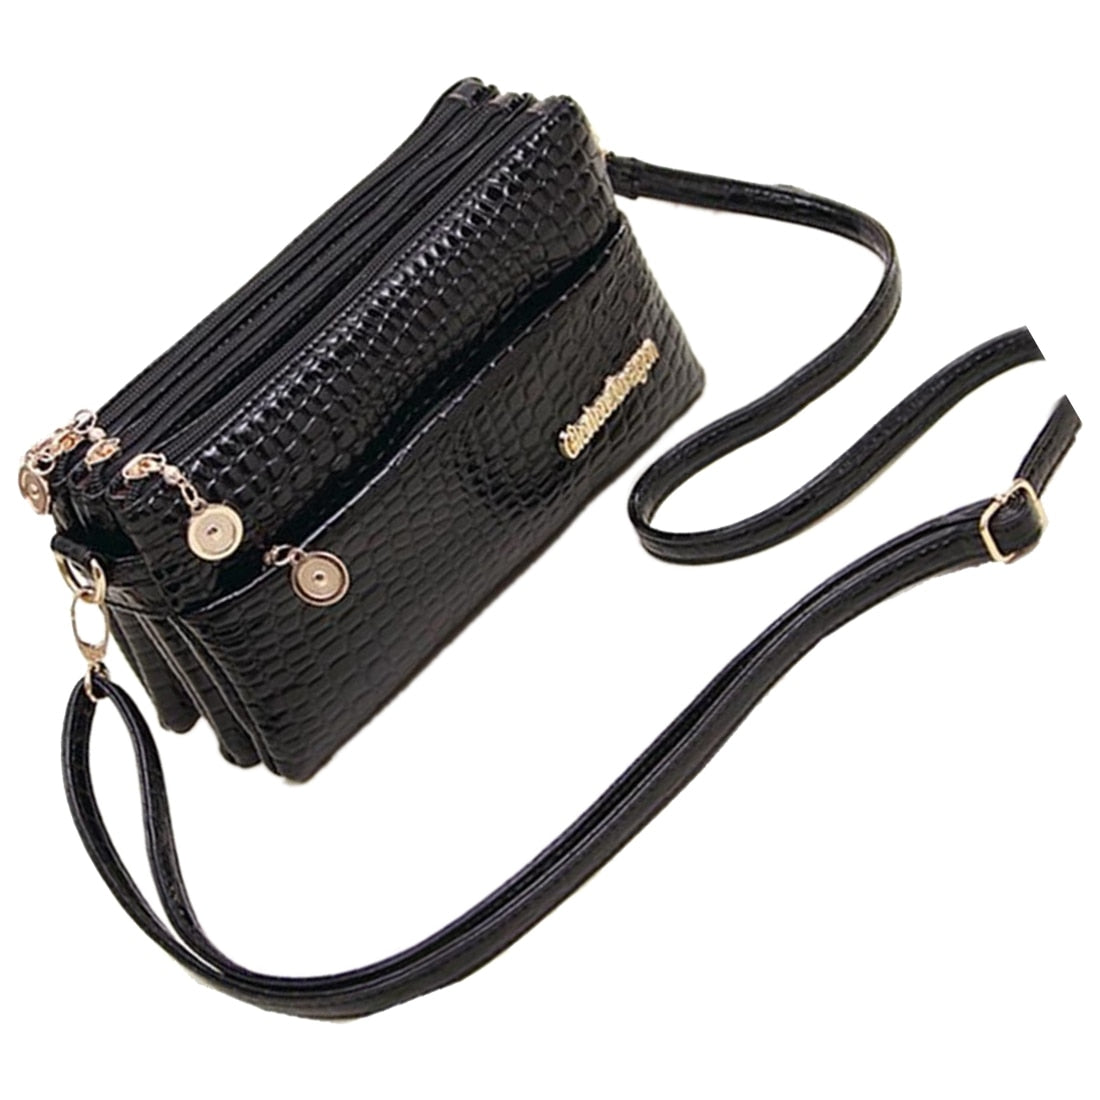 Hot Women handbags Small Shoulder Bag Crocodile Pattern Women Messenger Bags for Women Handbag Clutch Black - ebowsos